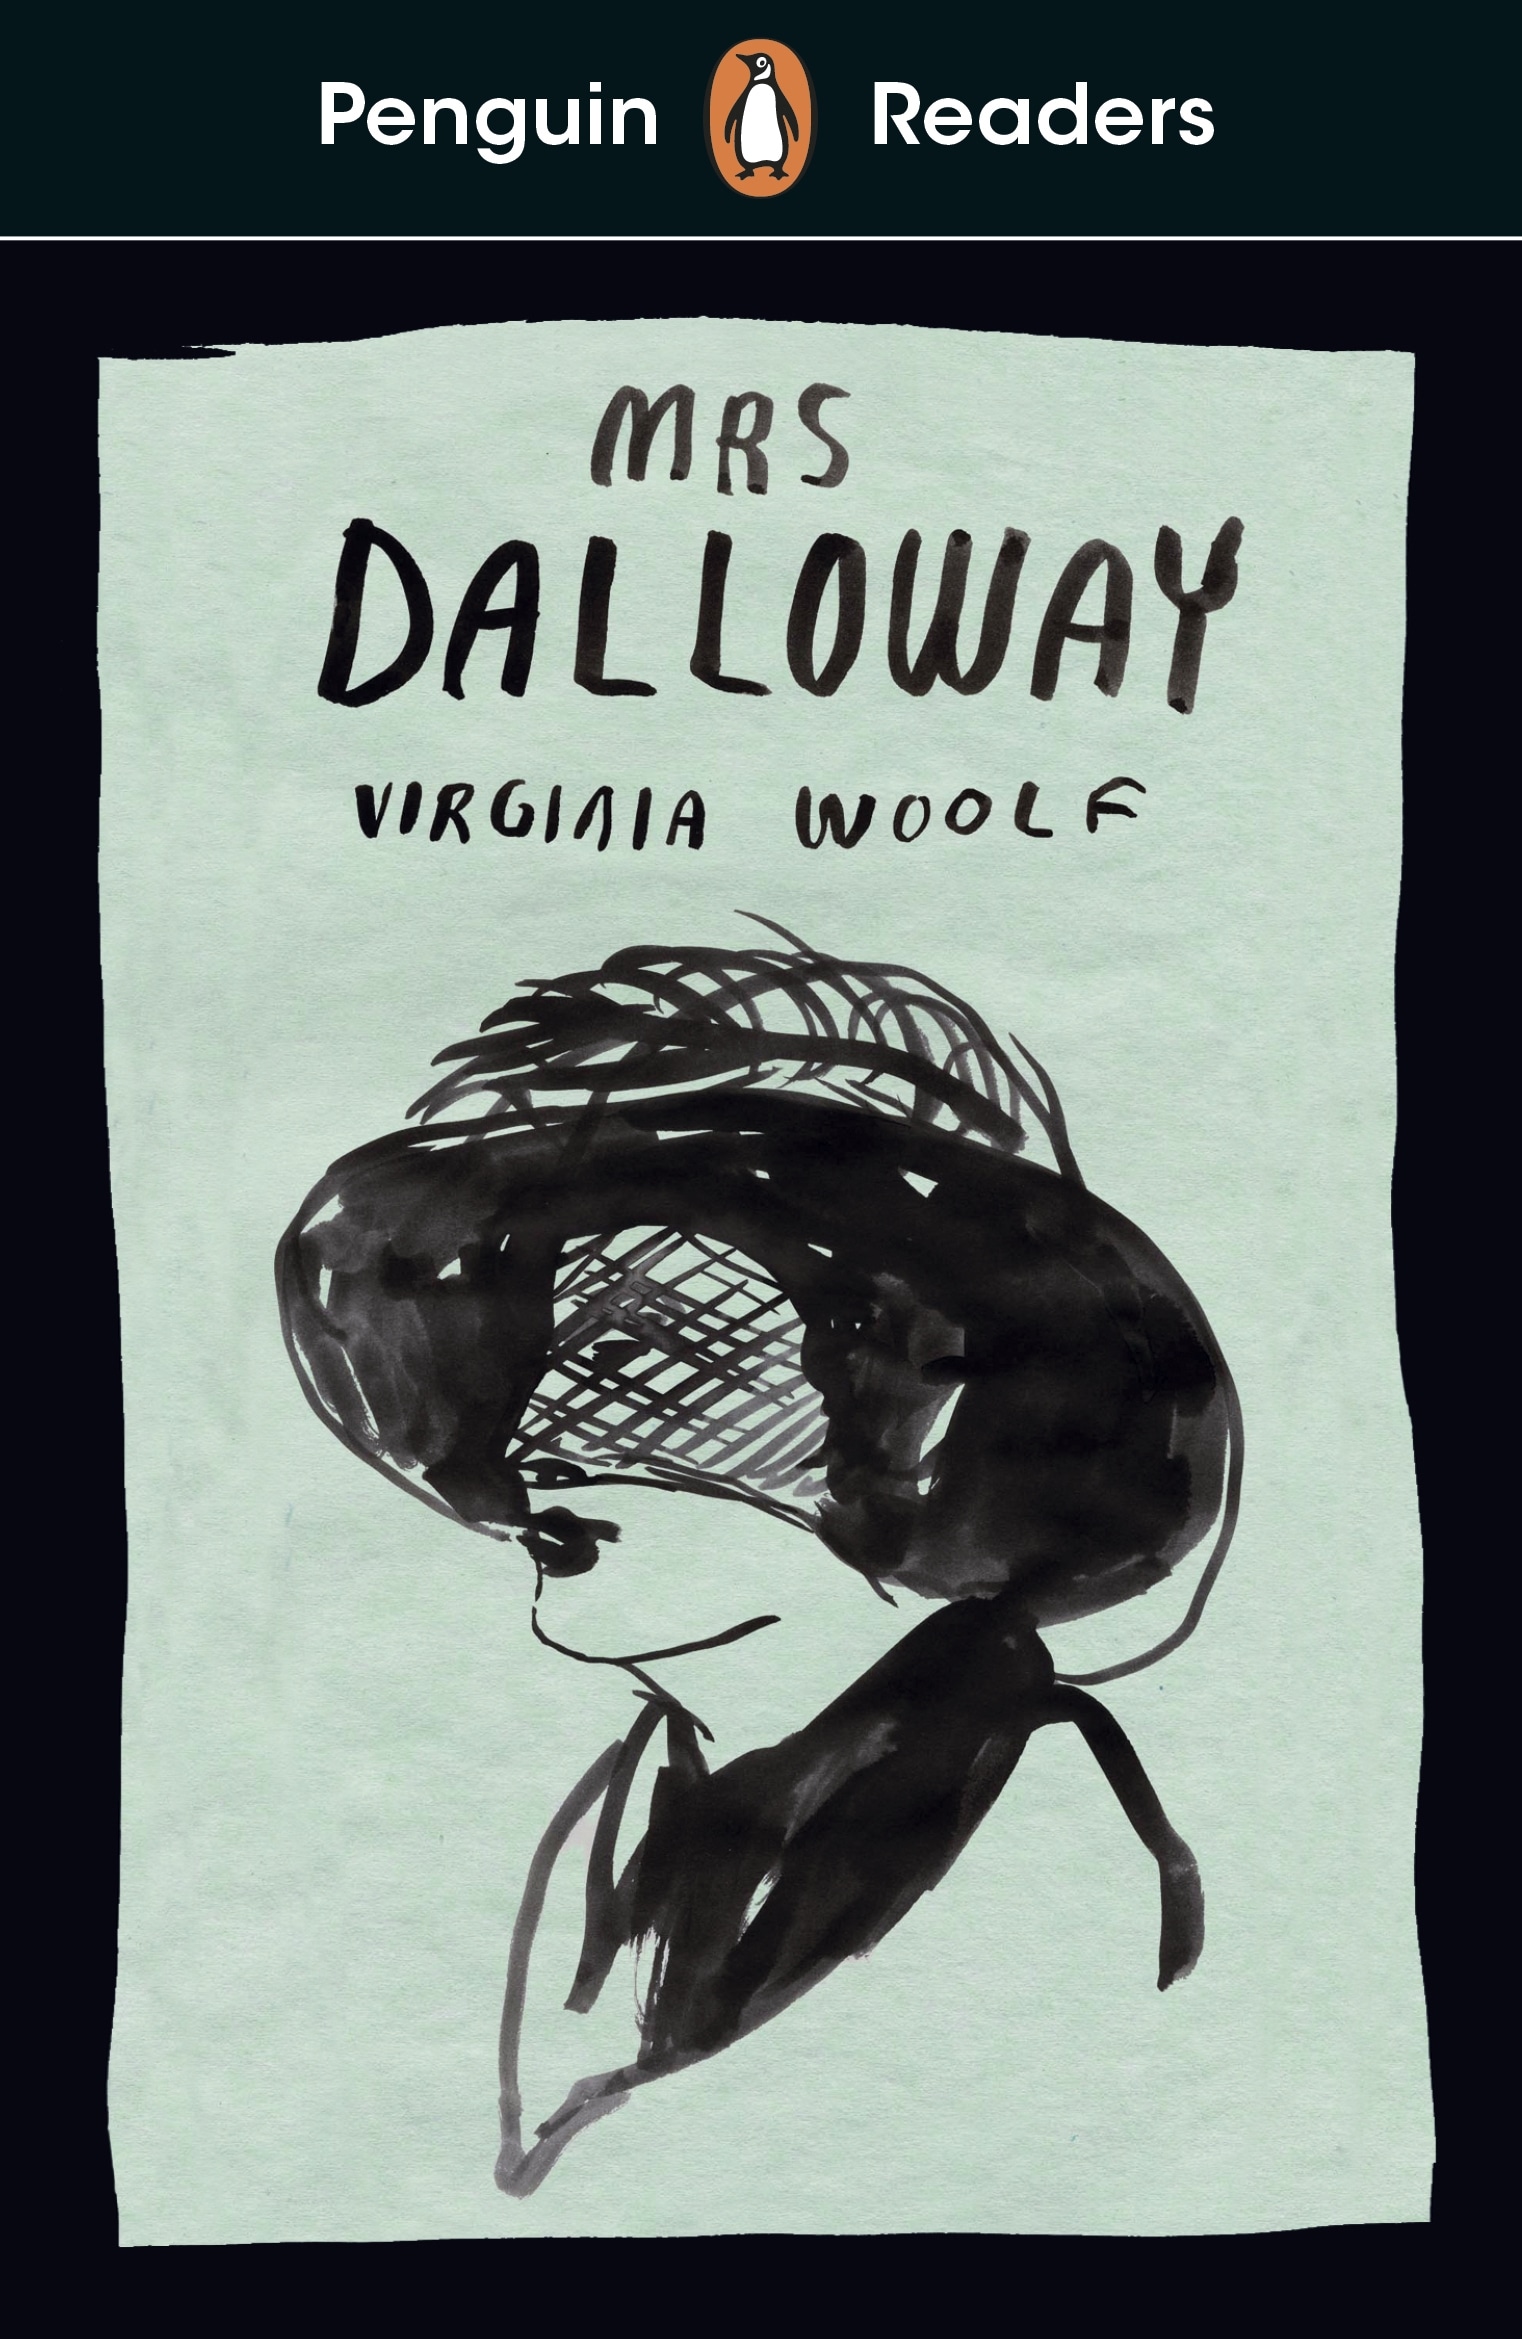 Book “Penguin Readers Level 7: Mrs Dalloway (ELT Graded Reader)” by Virginia Woolf — September 30, 2021